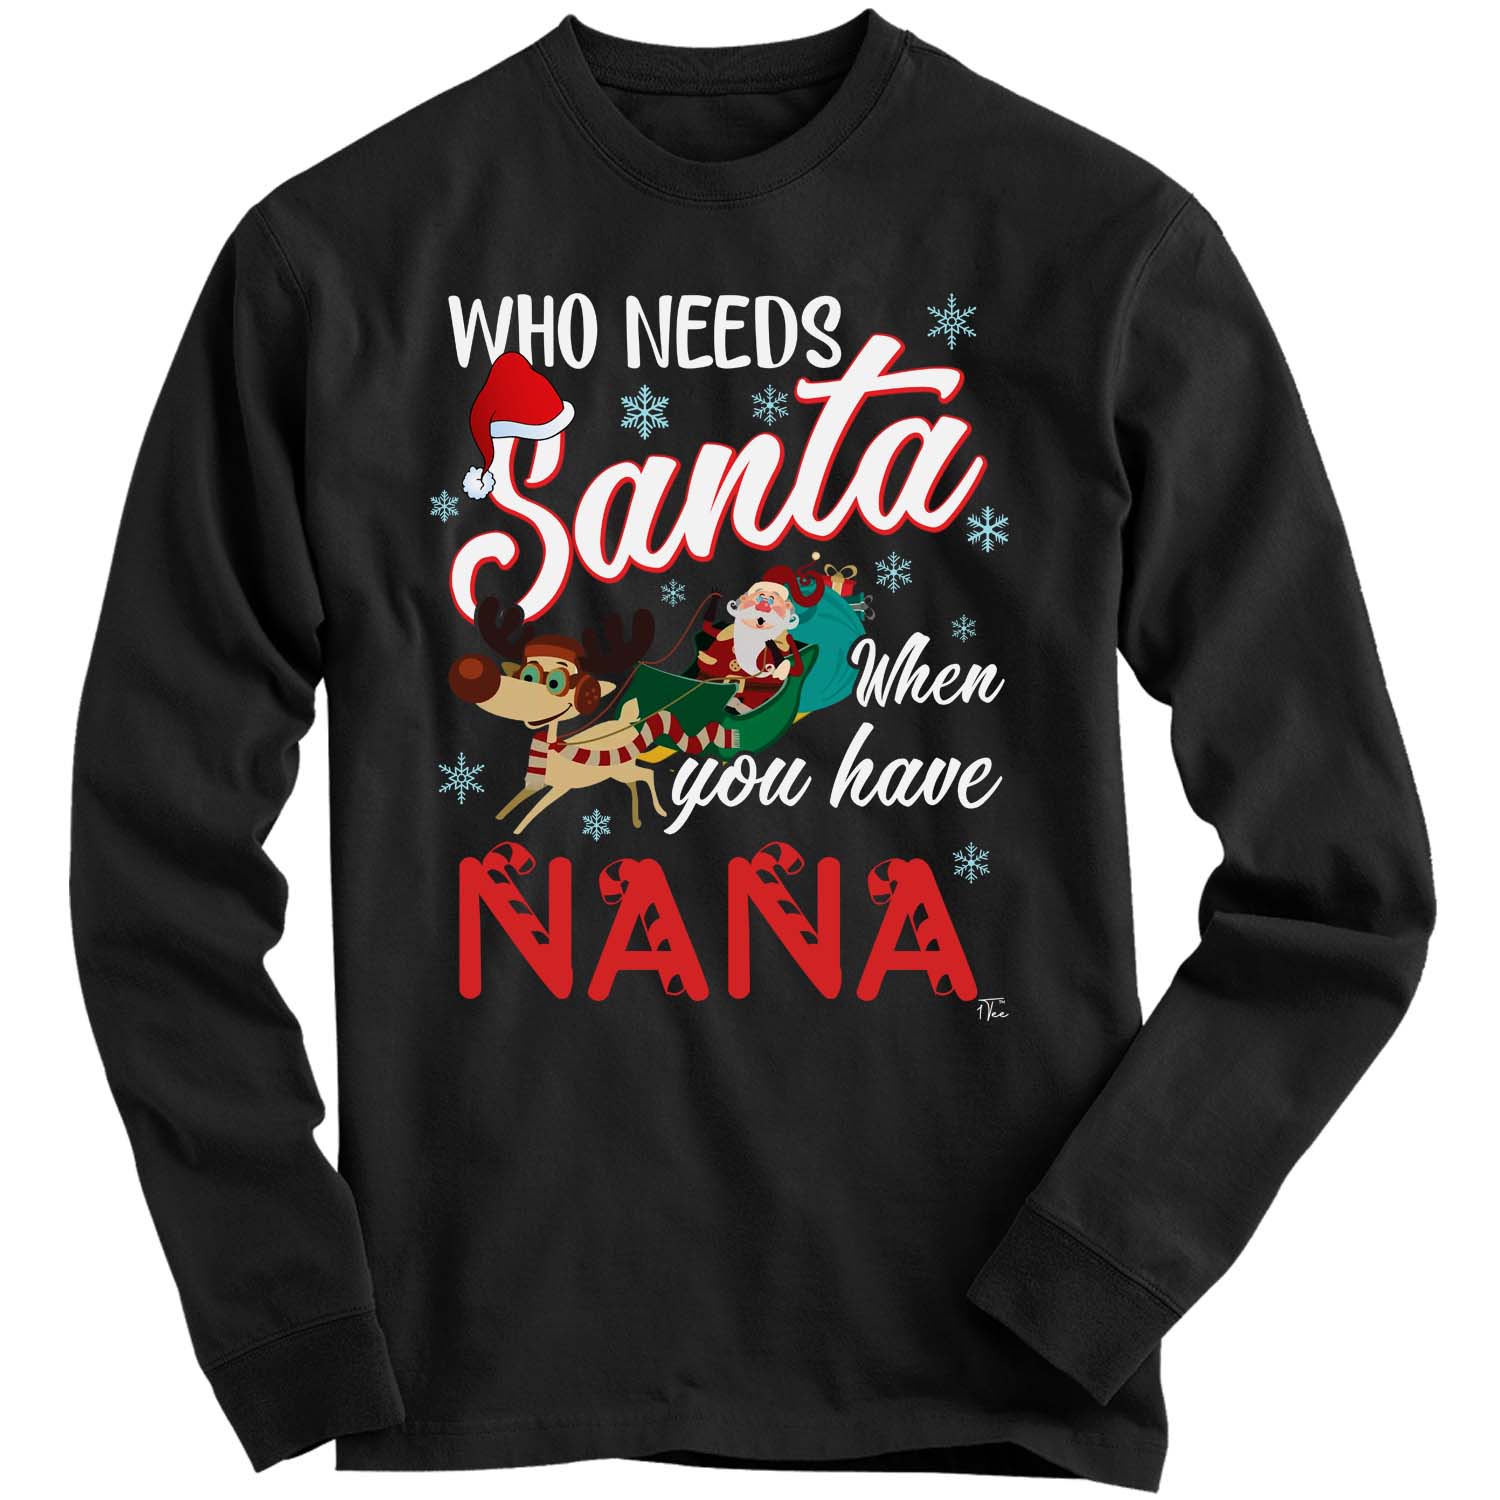 1Tee Mens Who Needs Santa when you have Nana Sweatshirt Jumper | eBay